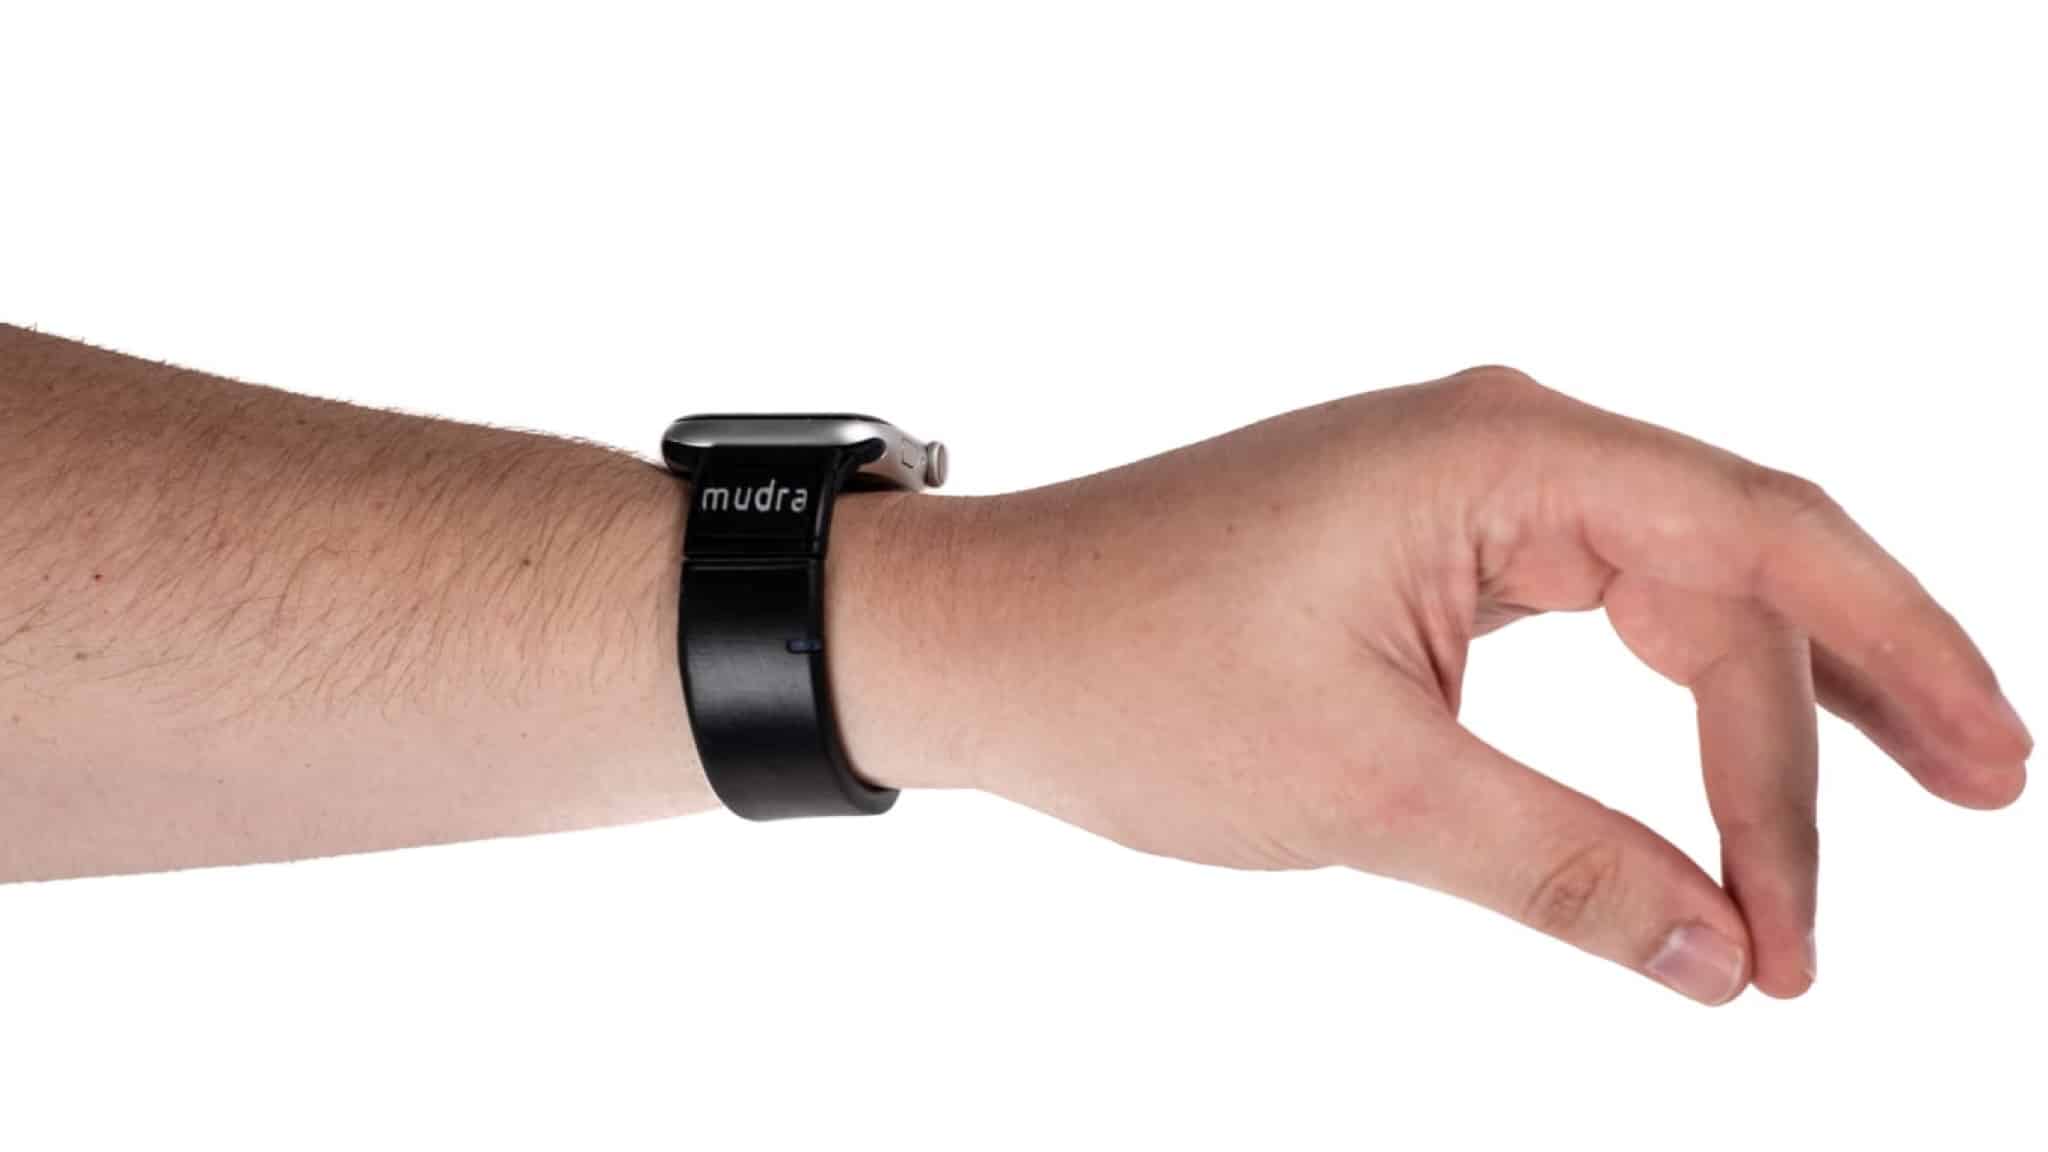 Mudra Band Gesture Control Wristband